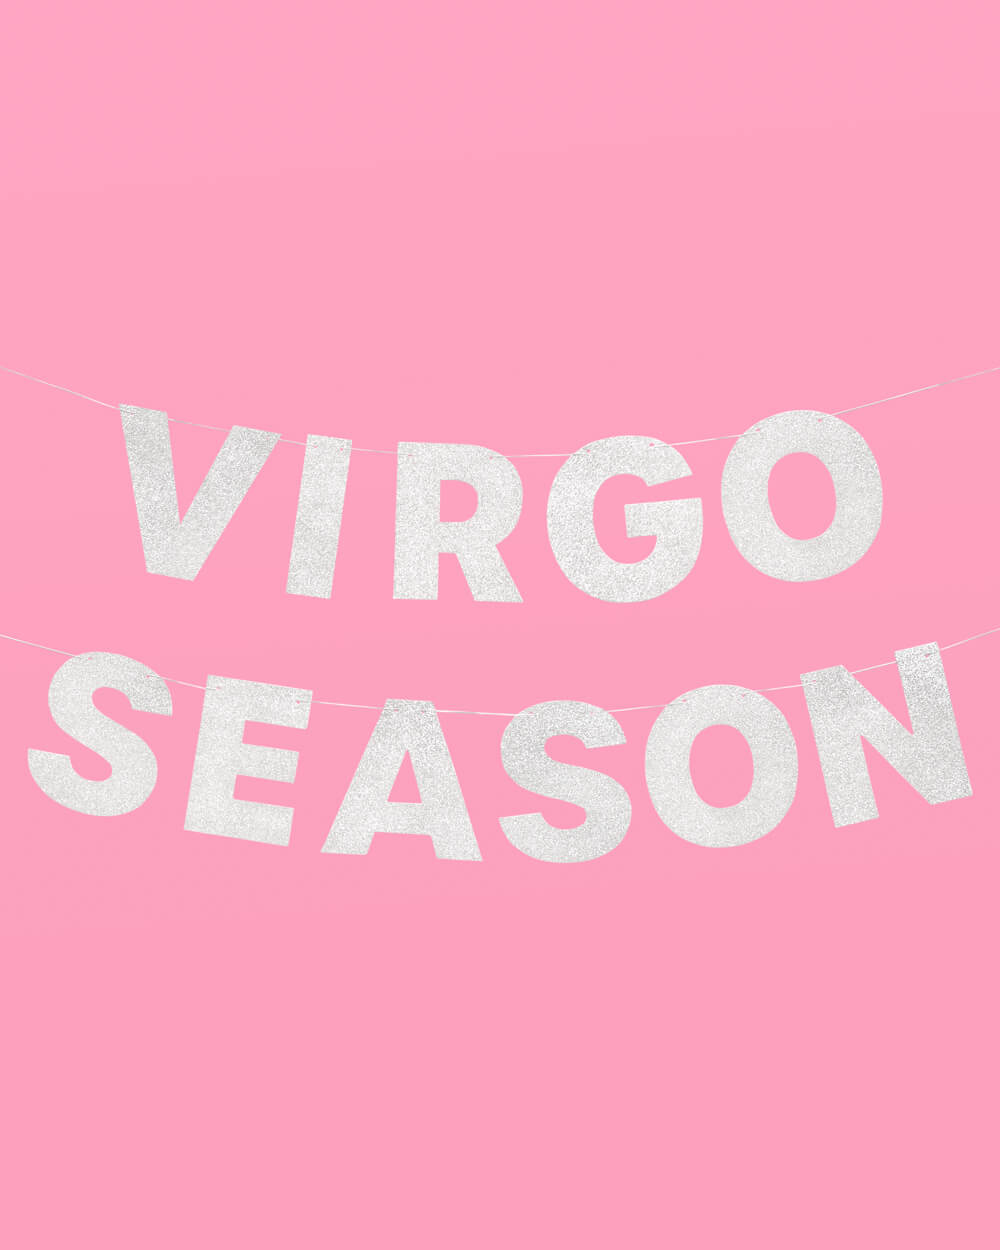 Virgo Season Duo - banner + hair pin